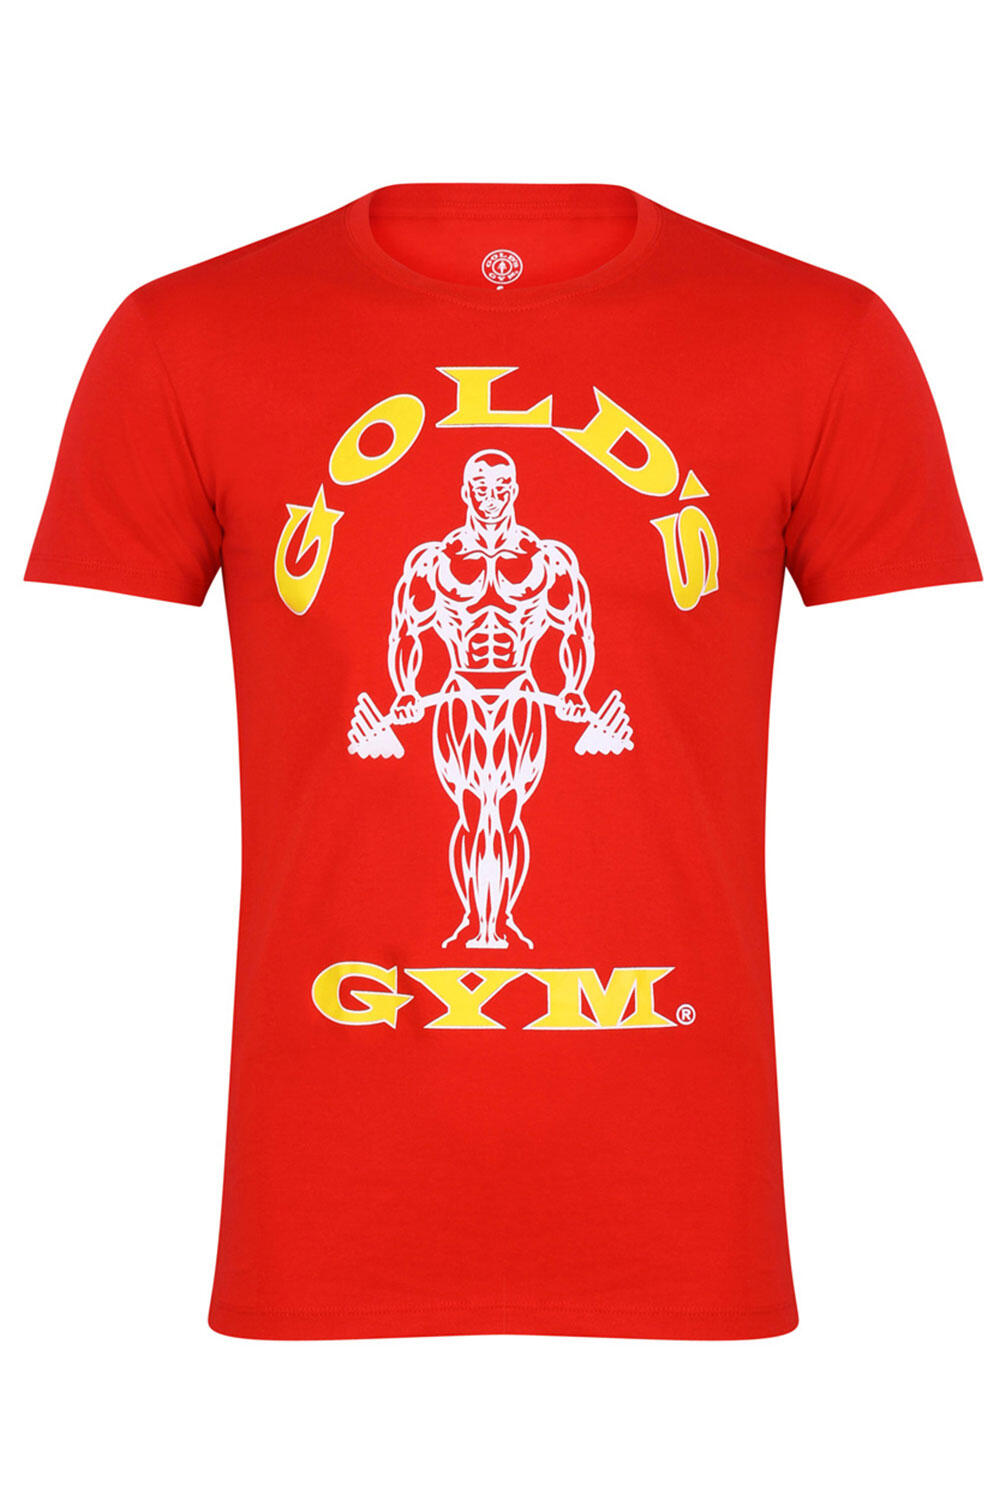 Men's Gold's Gym Muscle Joe Print T-Shirt 2/4